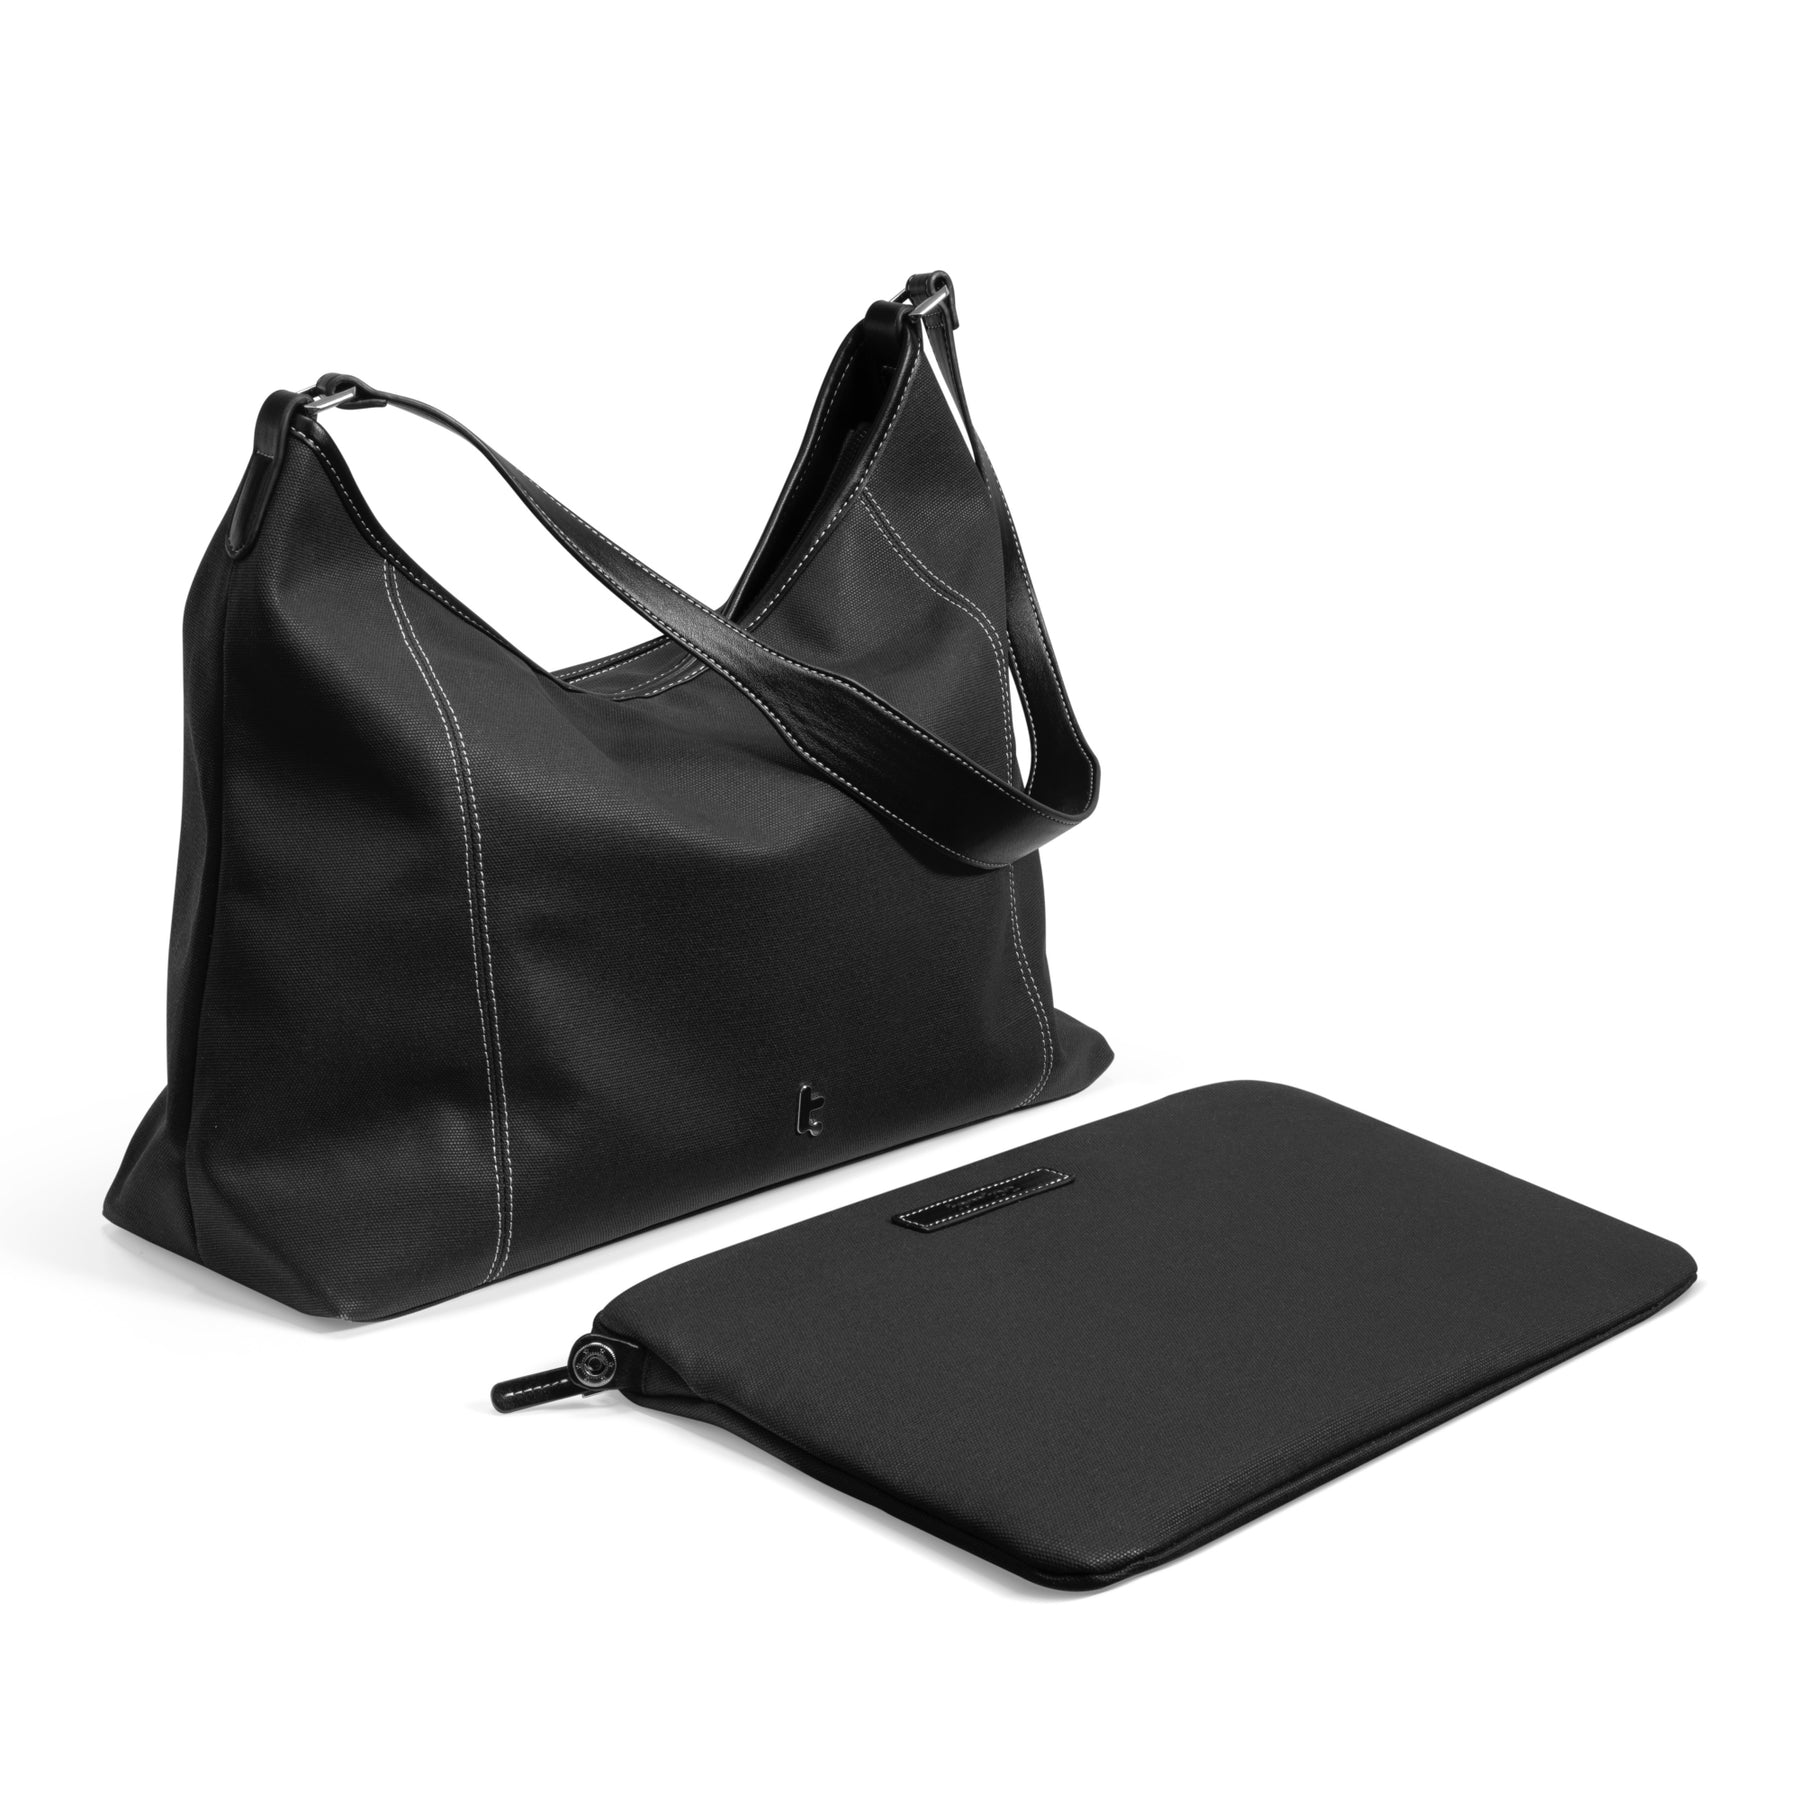 Versatile-T28 Laptop Tote Bag with Attachable Laptop Sleeve 18L